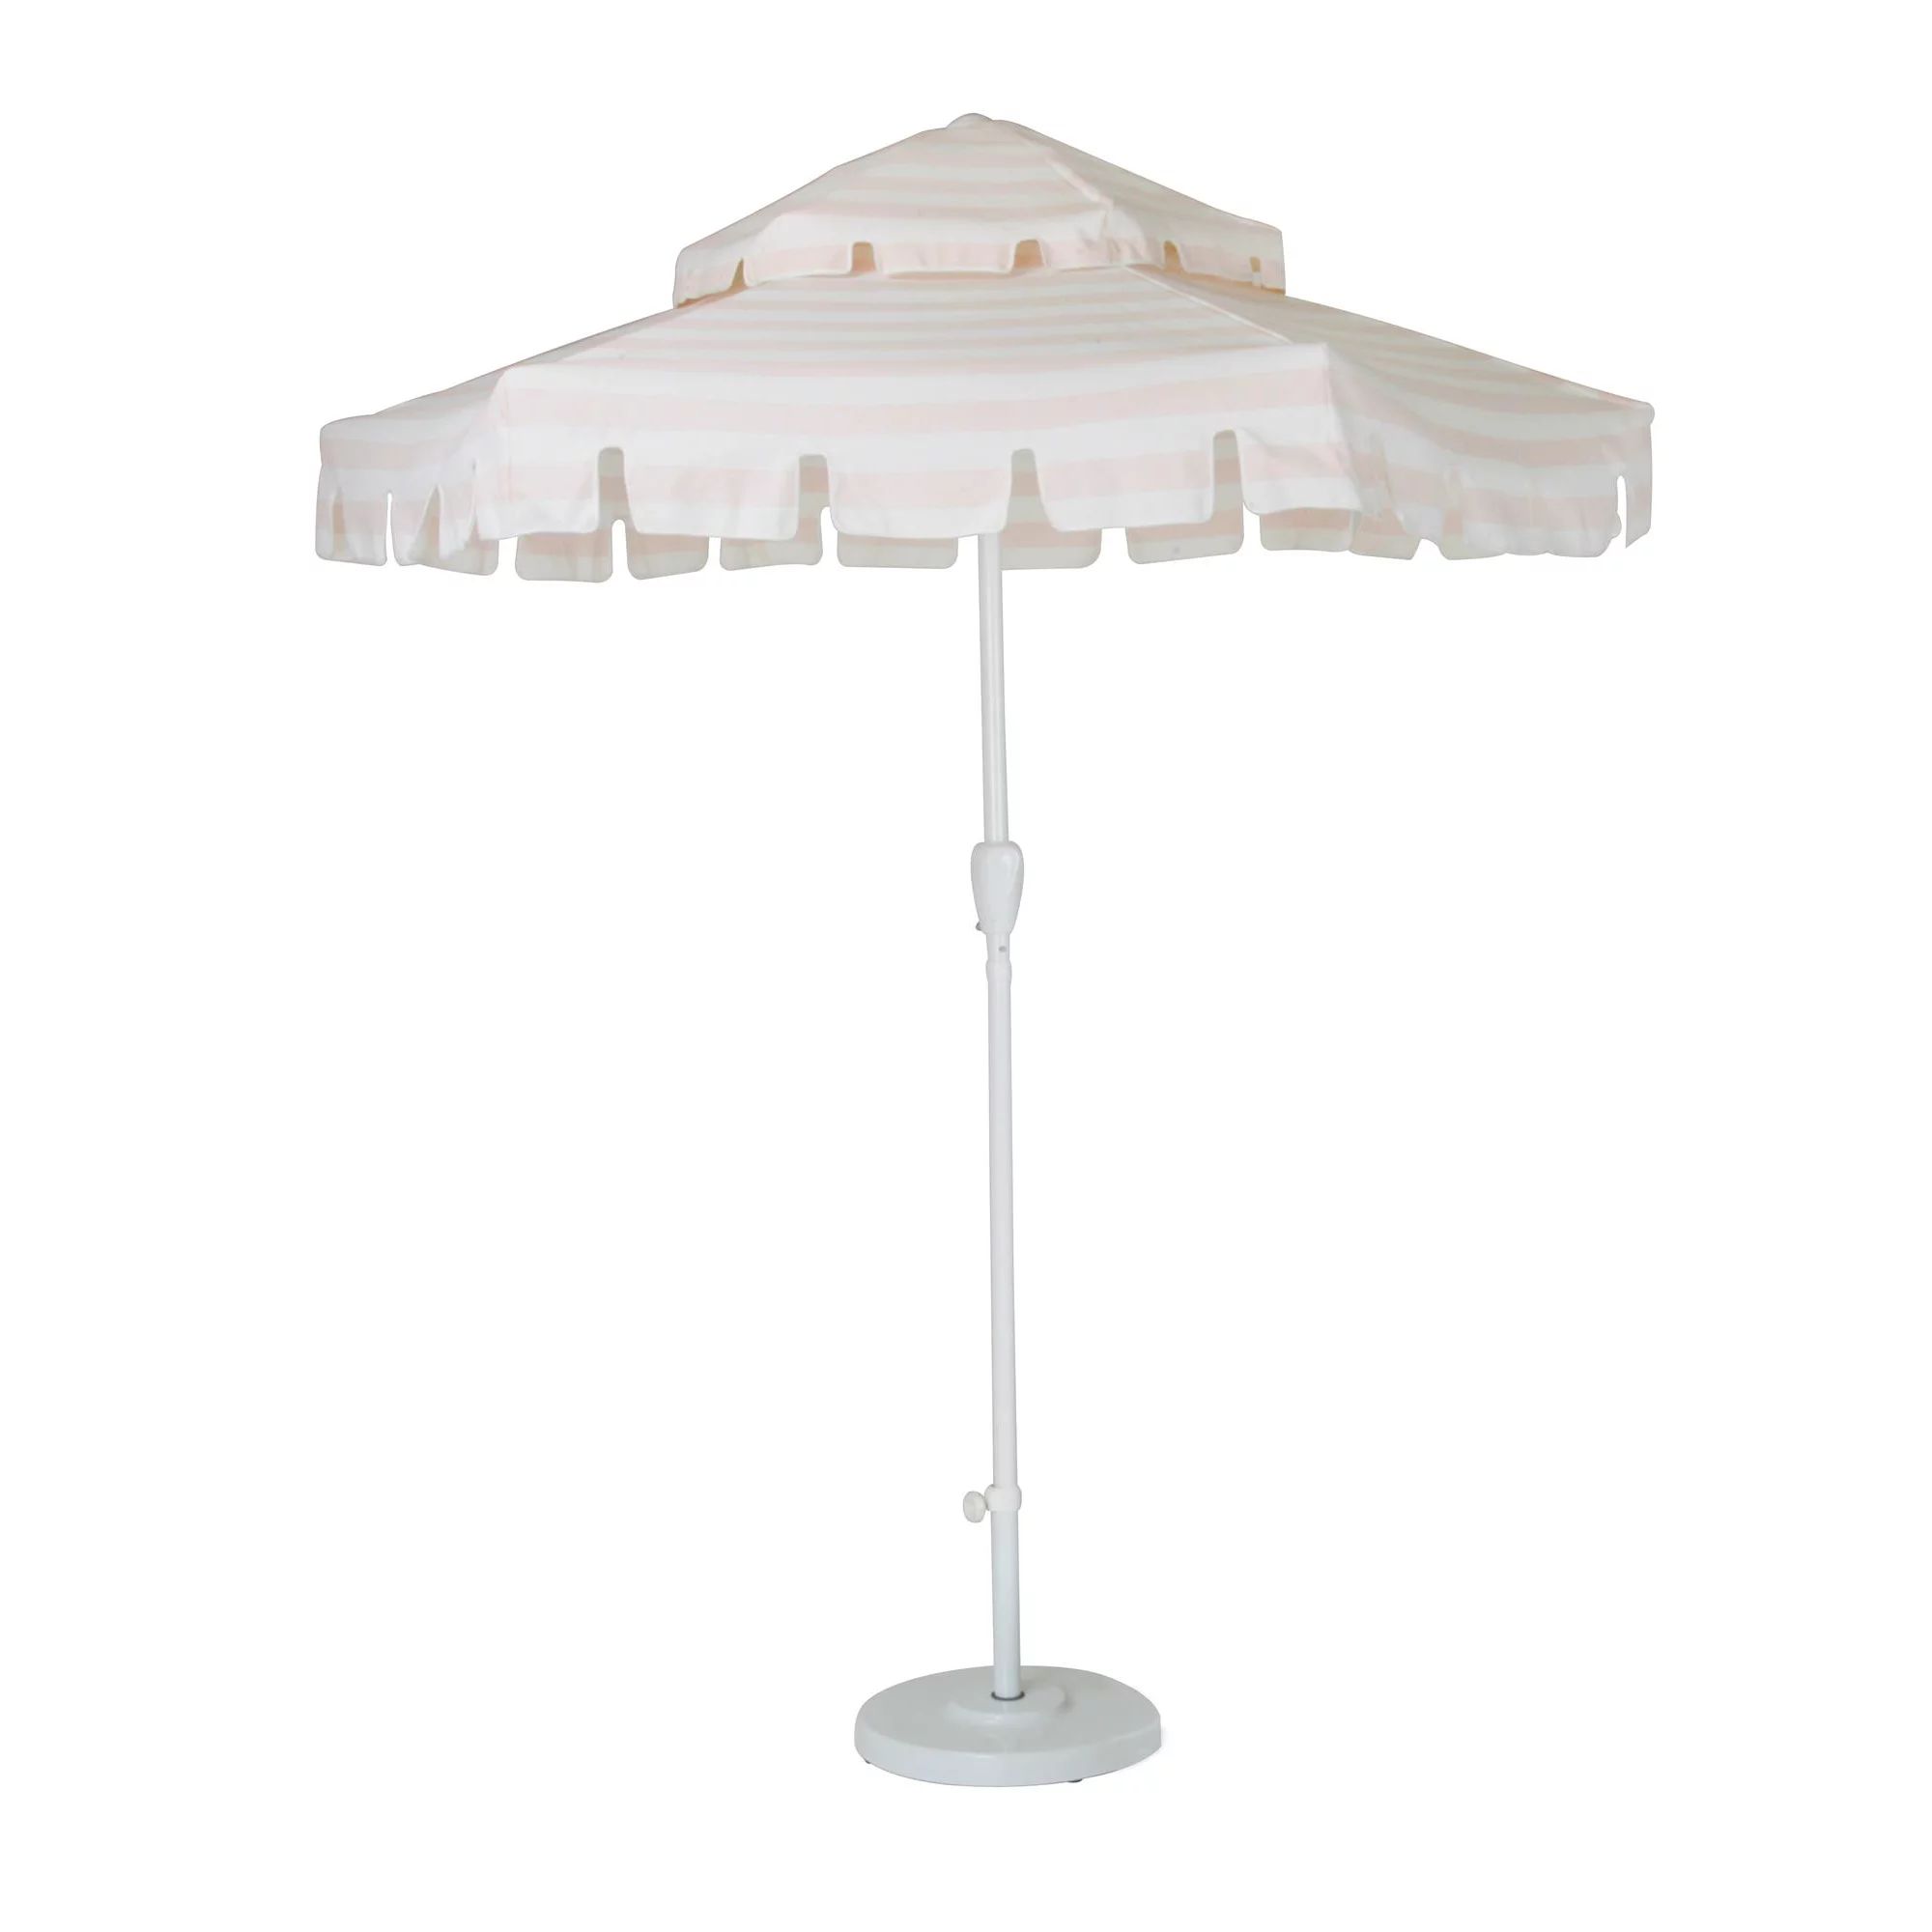 Novogratz Poolside Gossip Collection, Connie Outdoor Umbrella, Rosewater and White Stripes | Walmart (US)